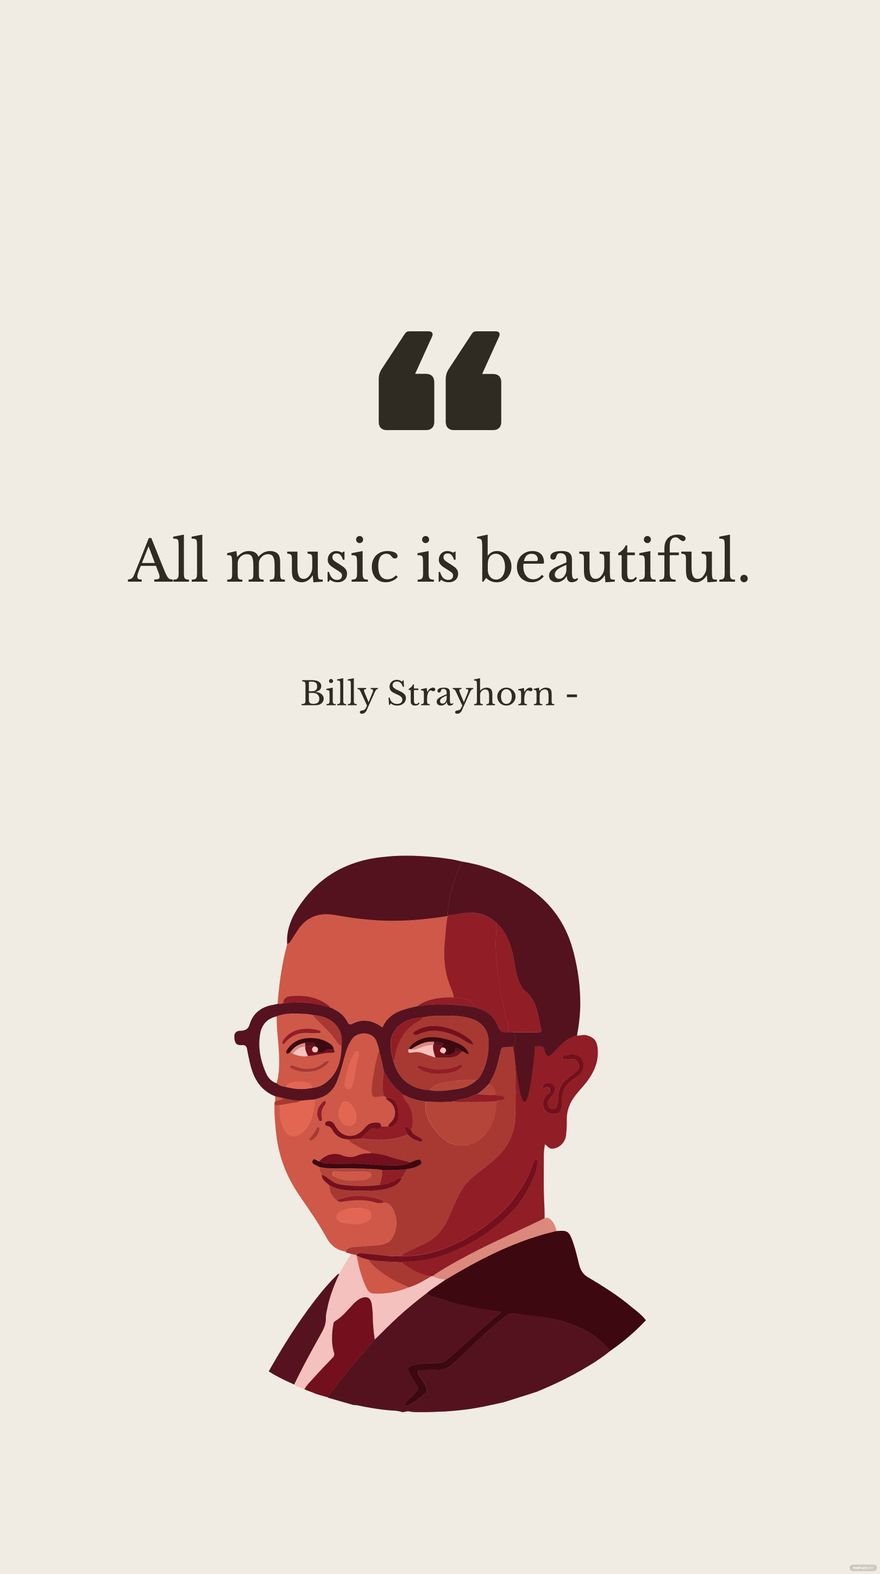 Free Billy Strayhorn - All music is beautiful. in JPG